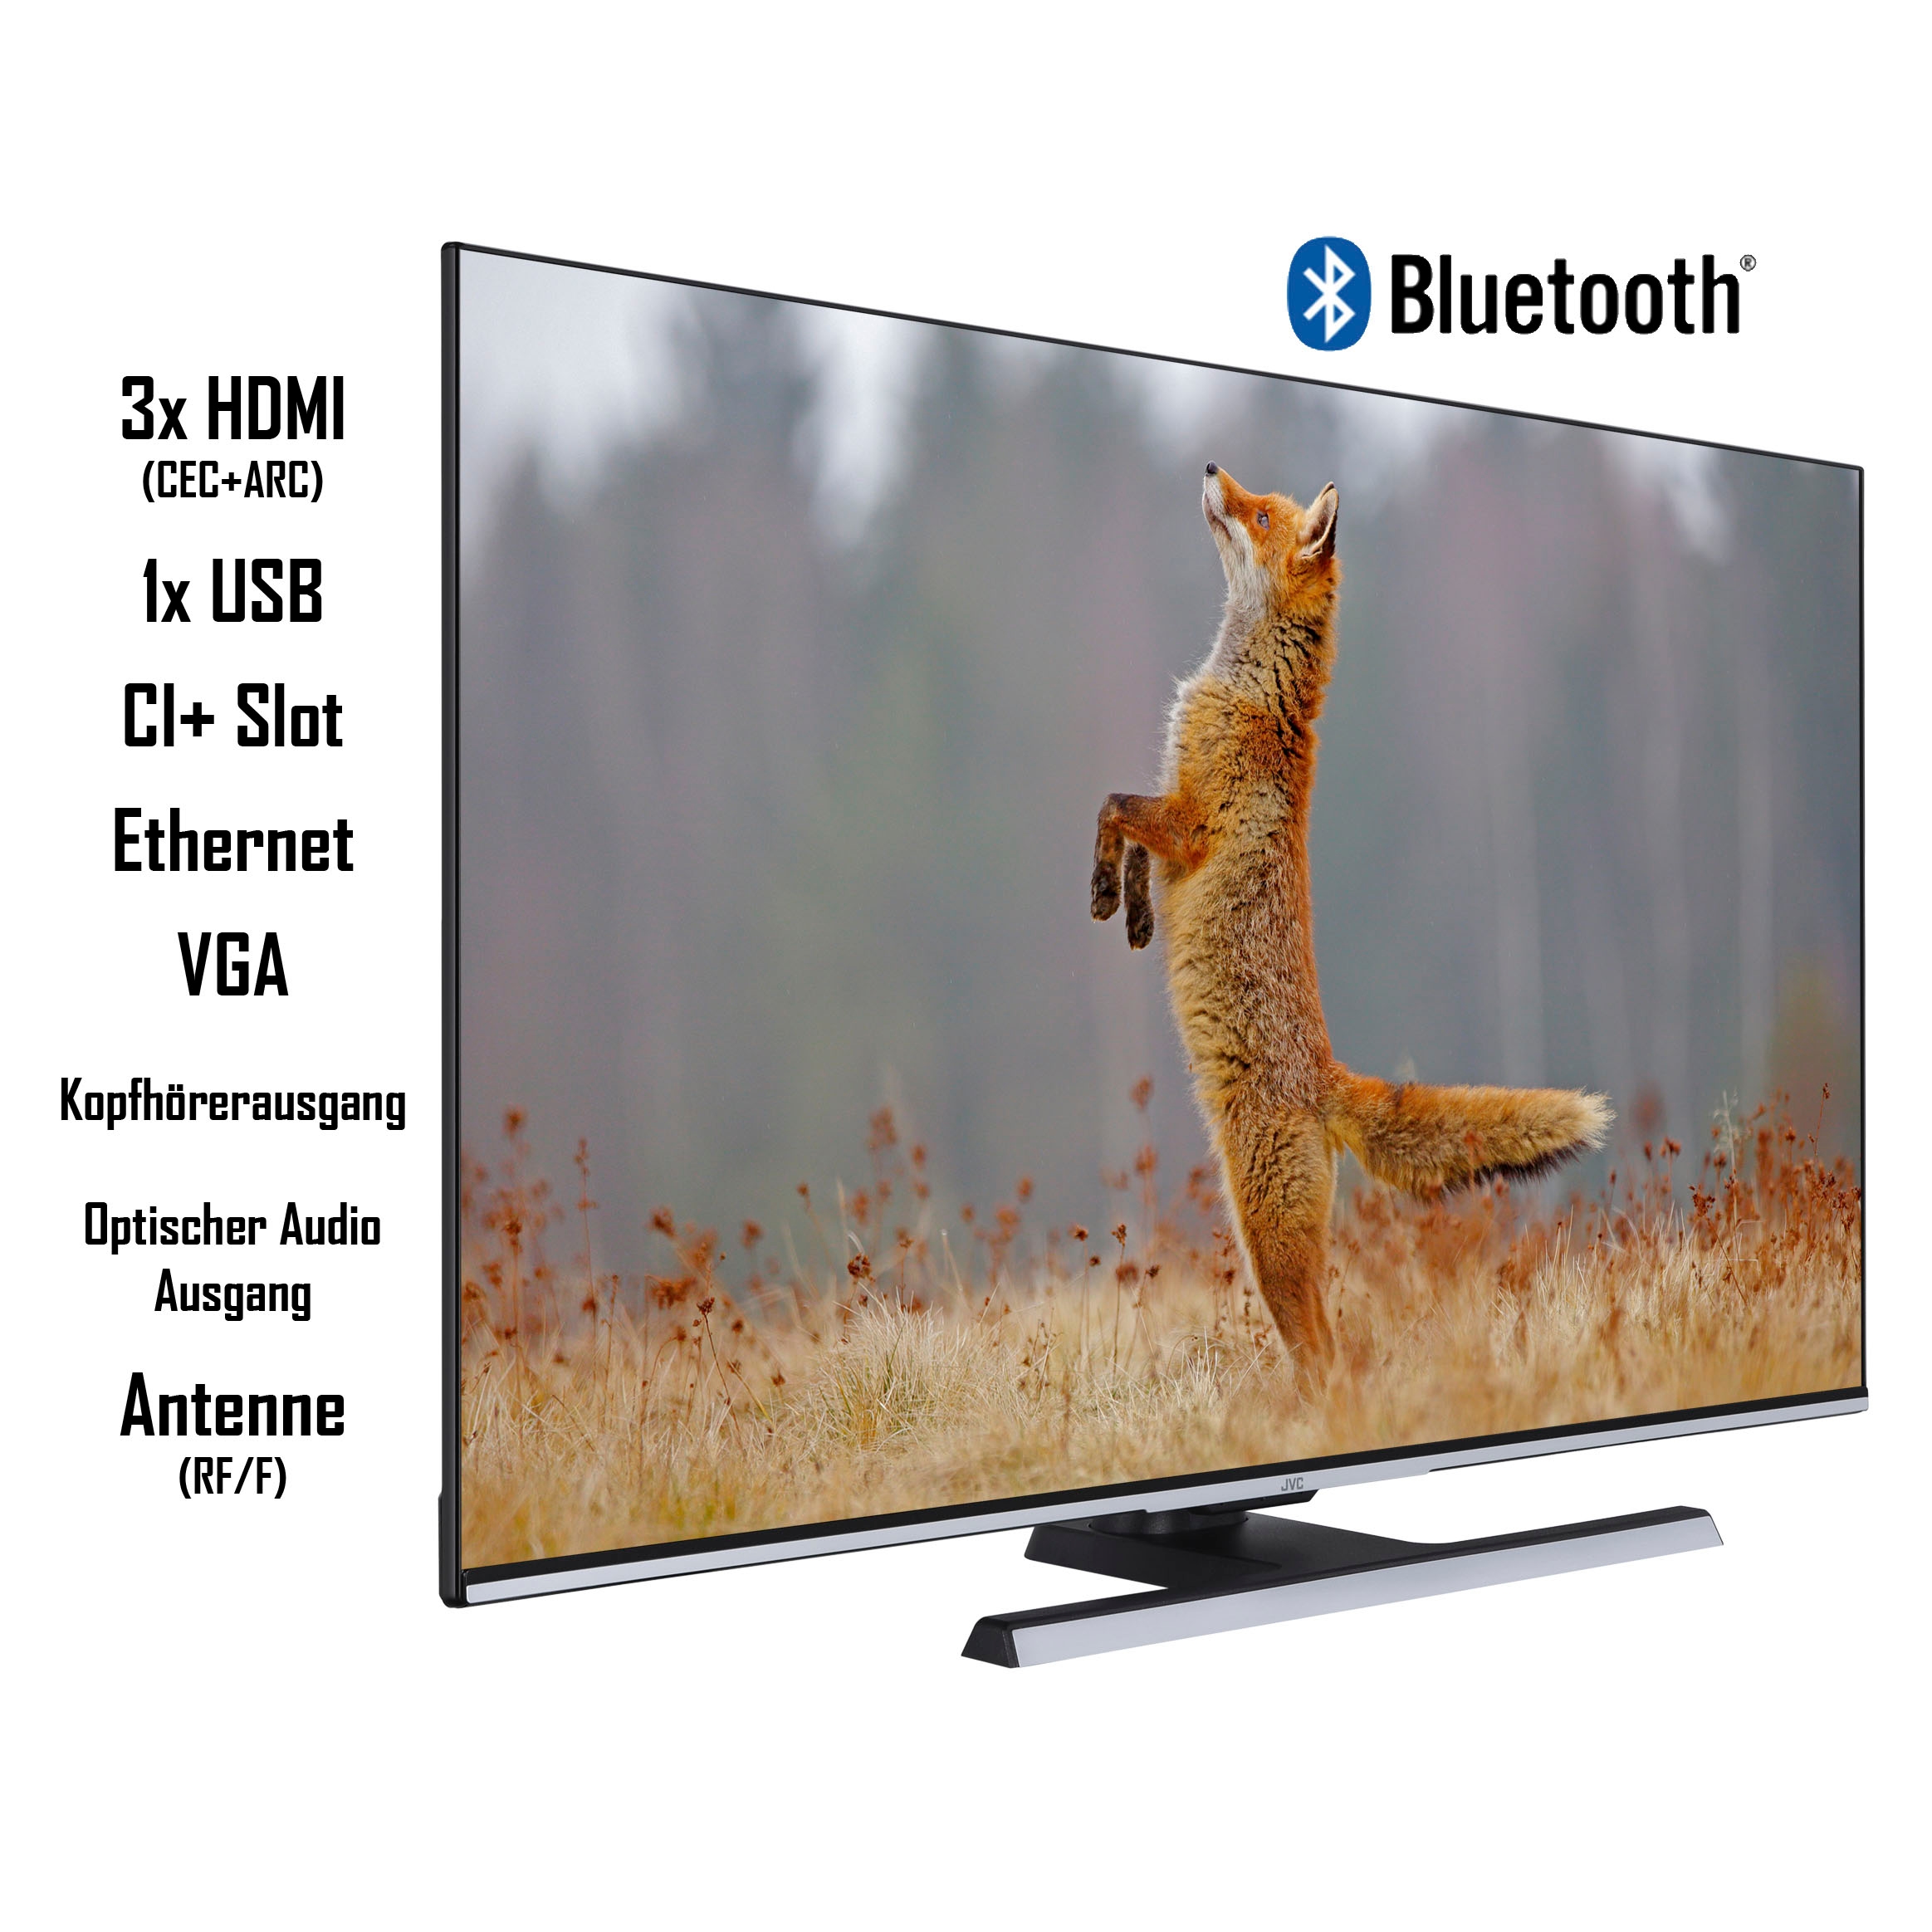 JVC LED-Fernseher, 108 cm/43 Zoll, 4K Ultra HD, Smart-TV